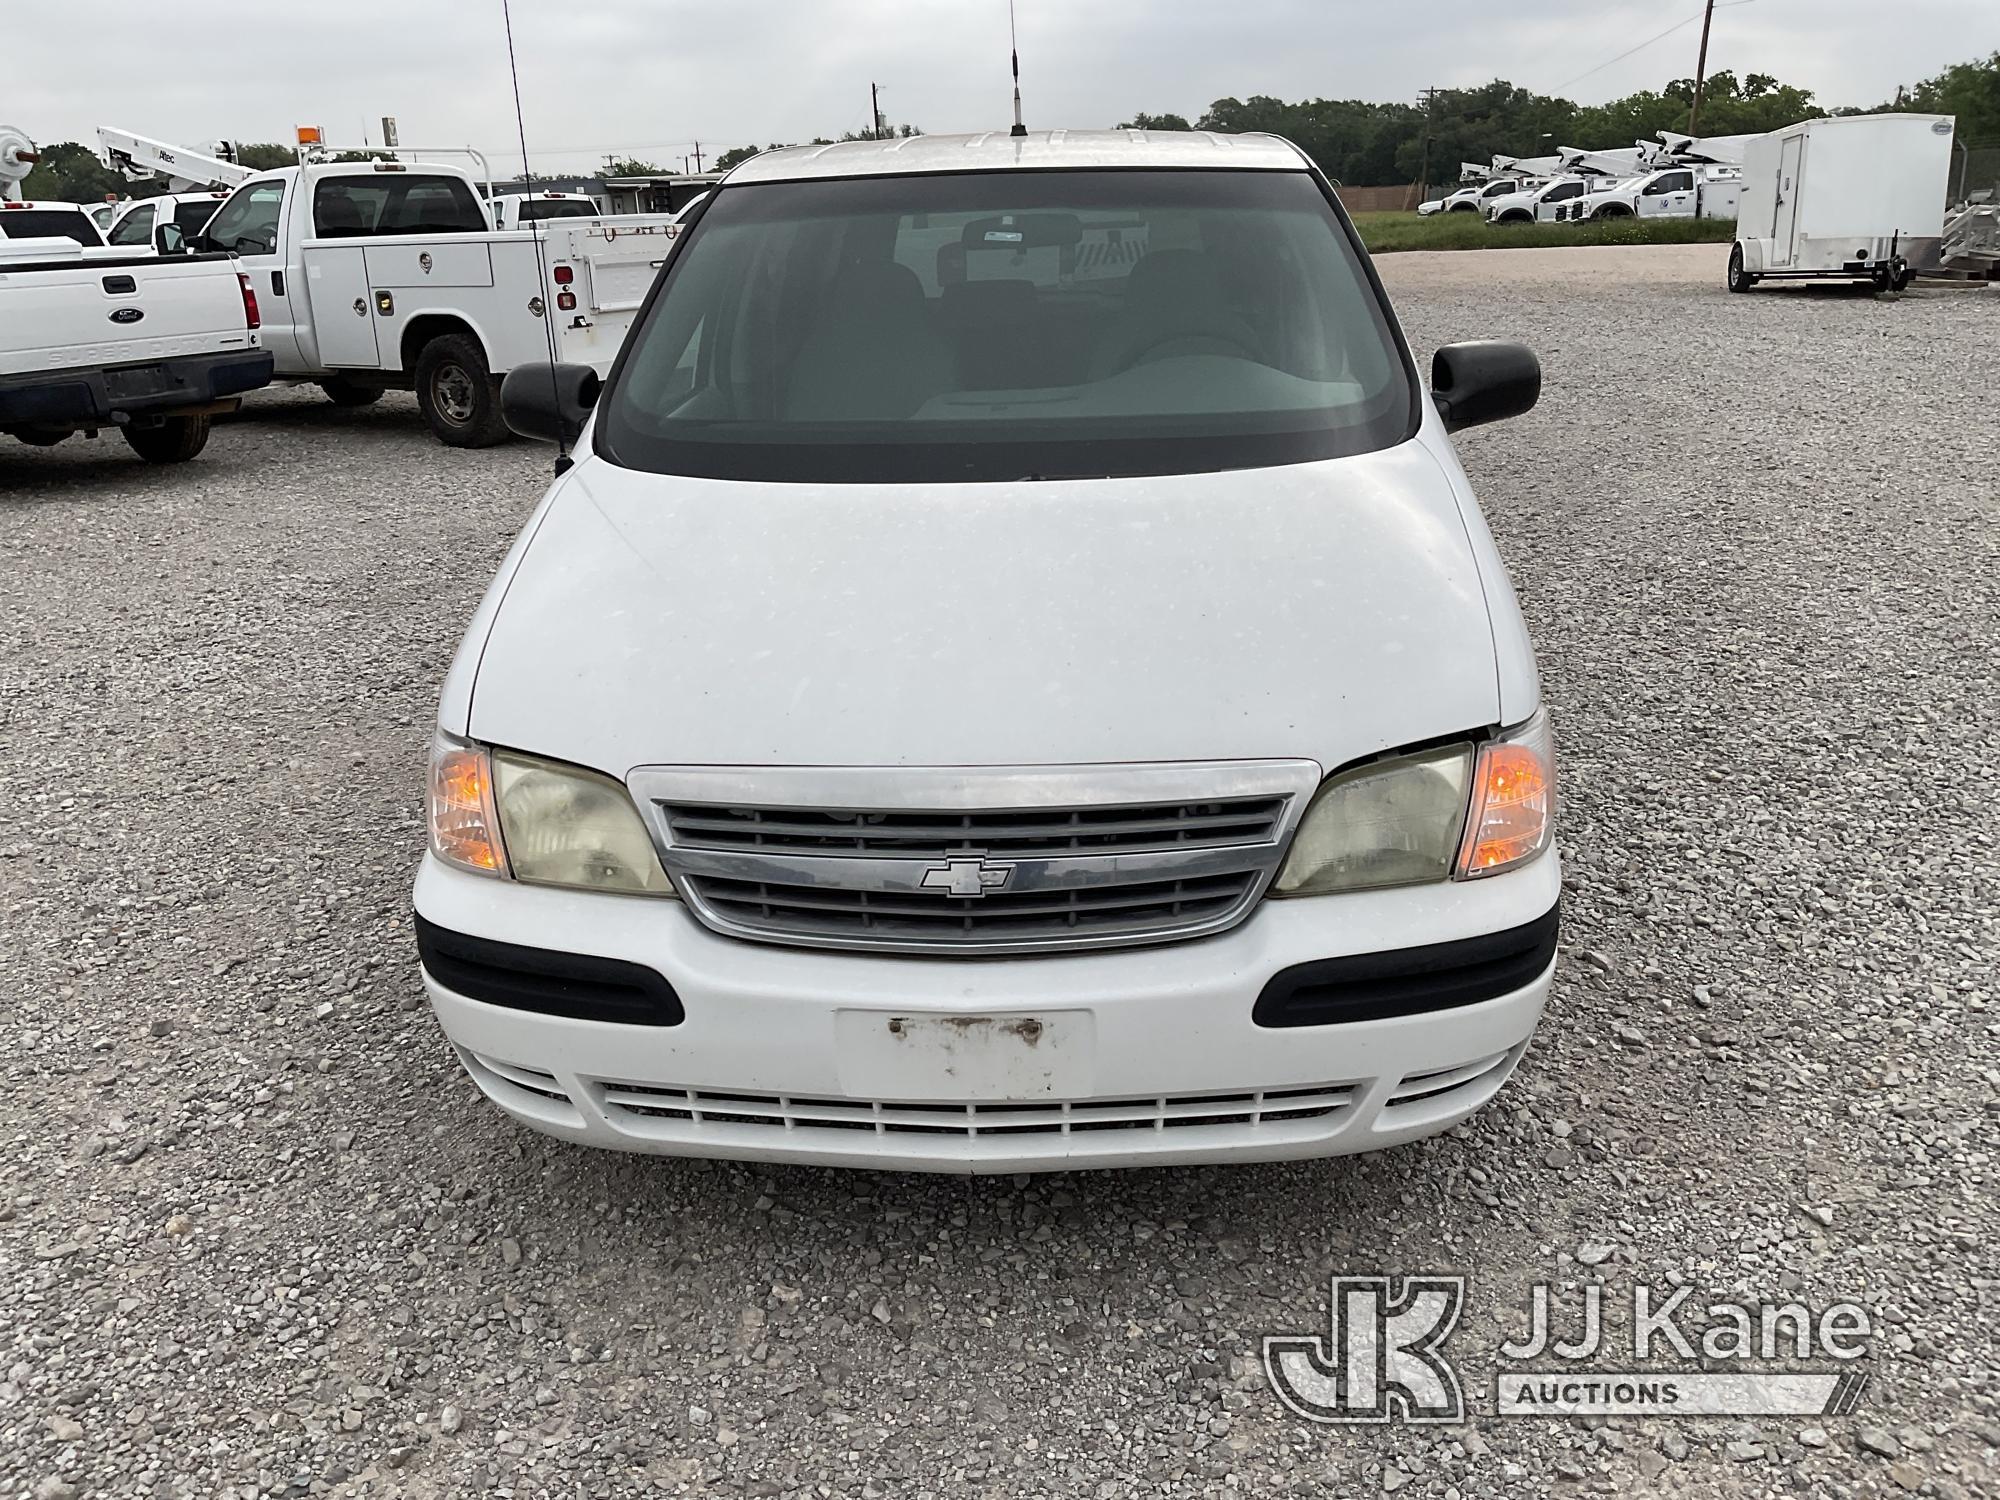 (Johnson City, TX) 2004 Chevrolet Venture Mini Passenger Van, , Cooperative owned and maintained Run